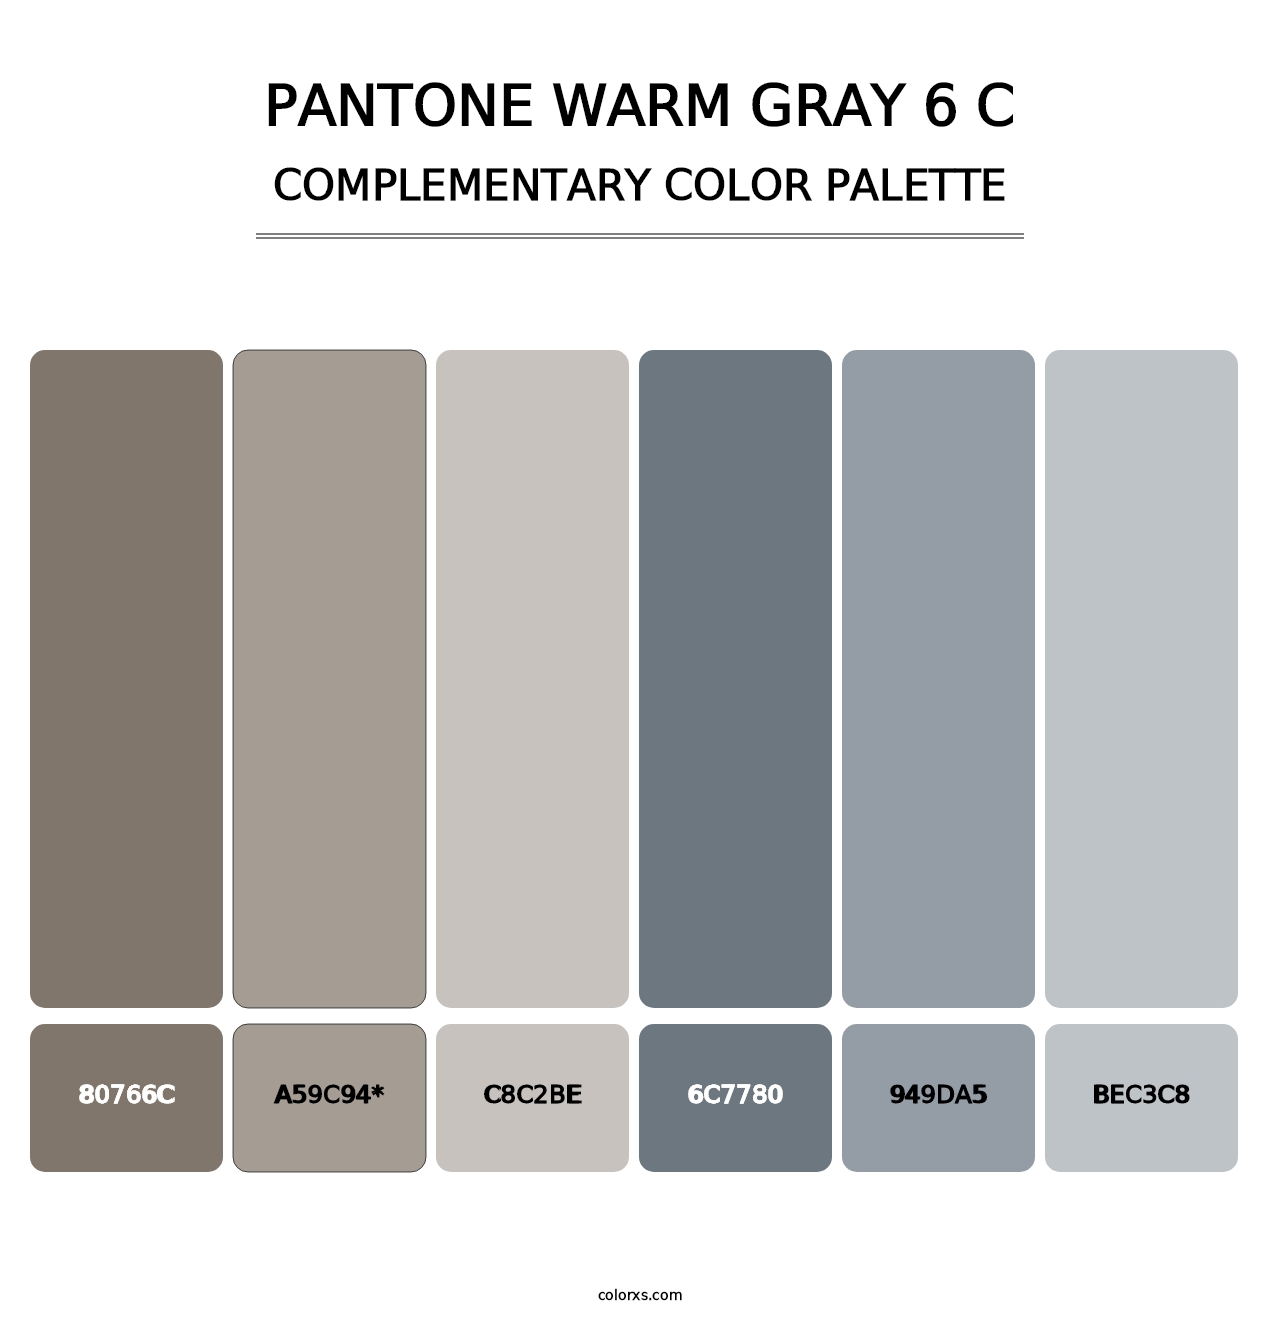 PANTONE Warm Gray 6 C - Complementary Color Palette